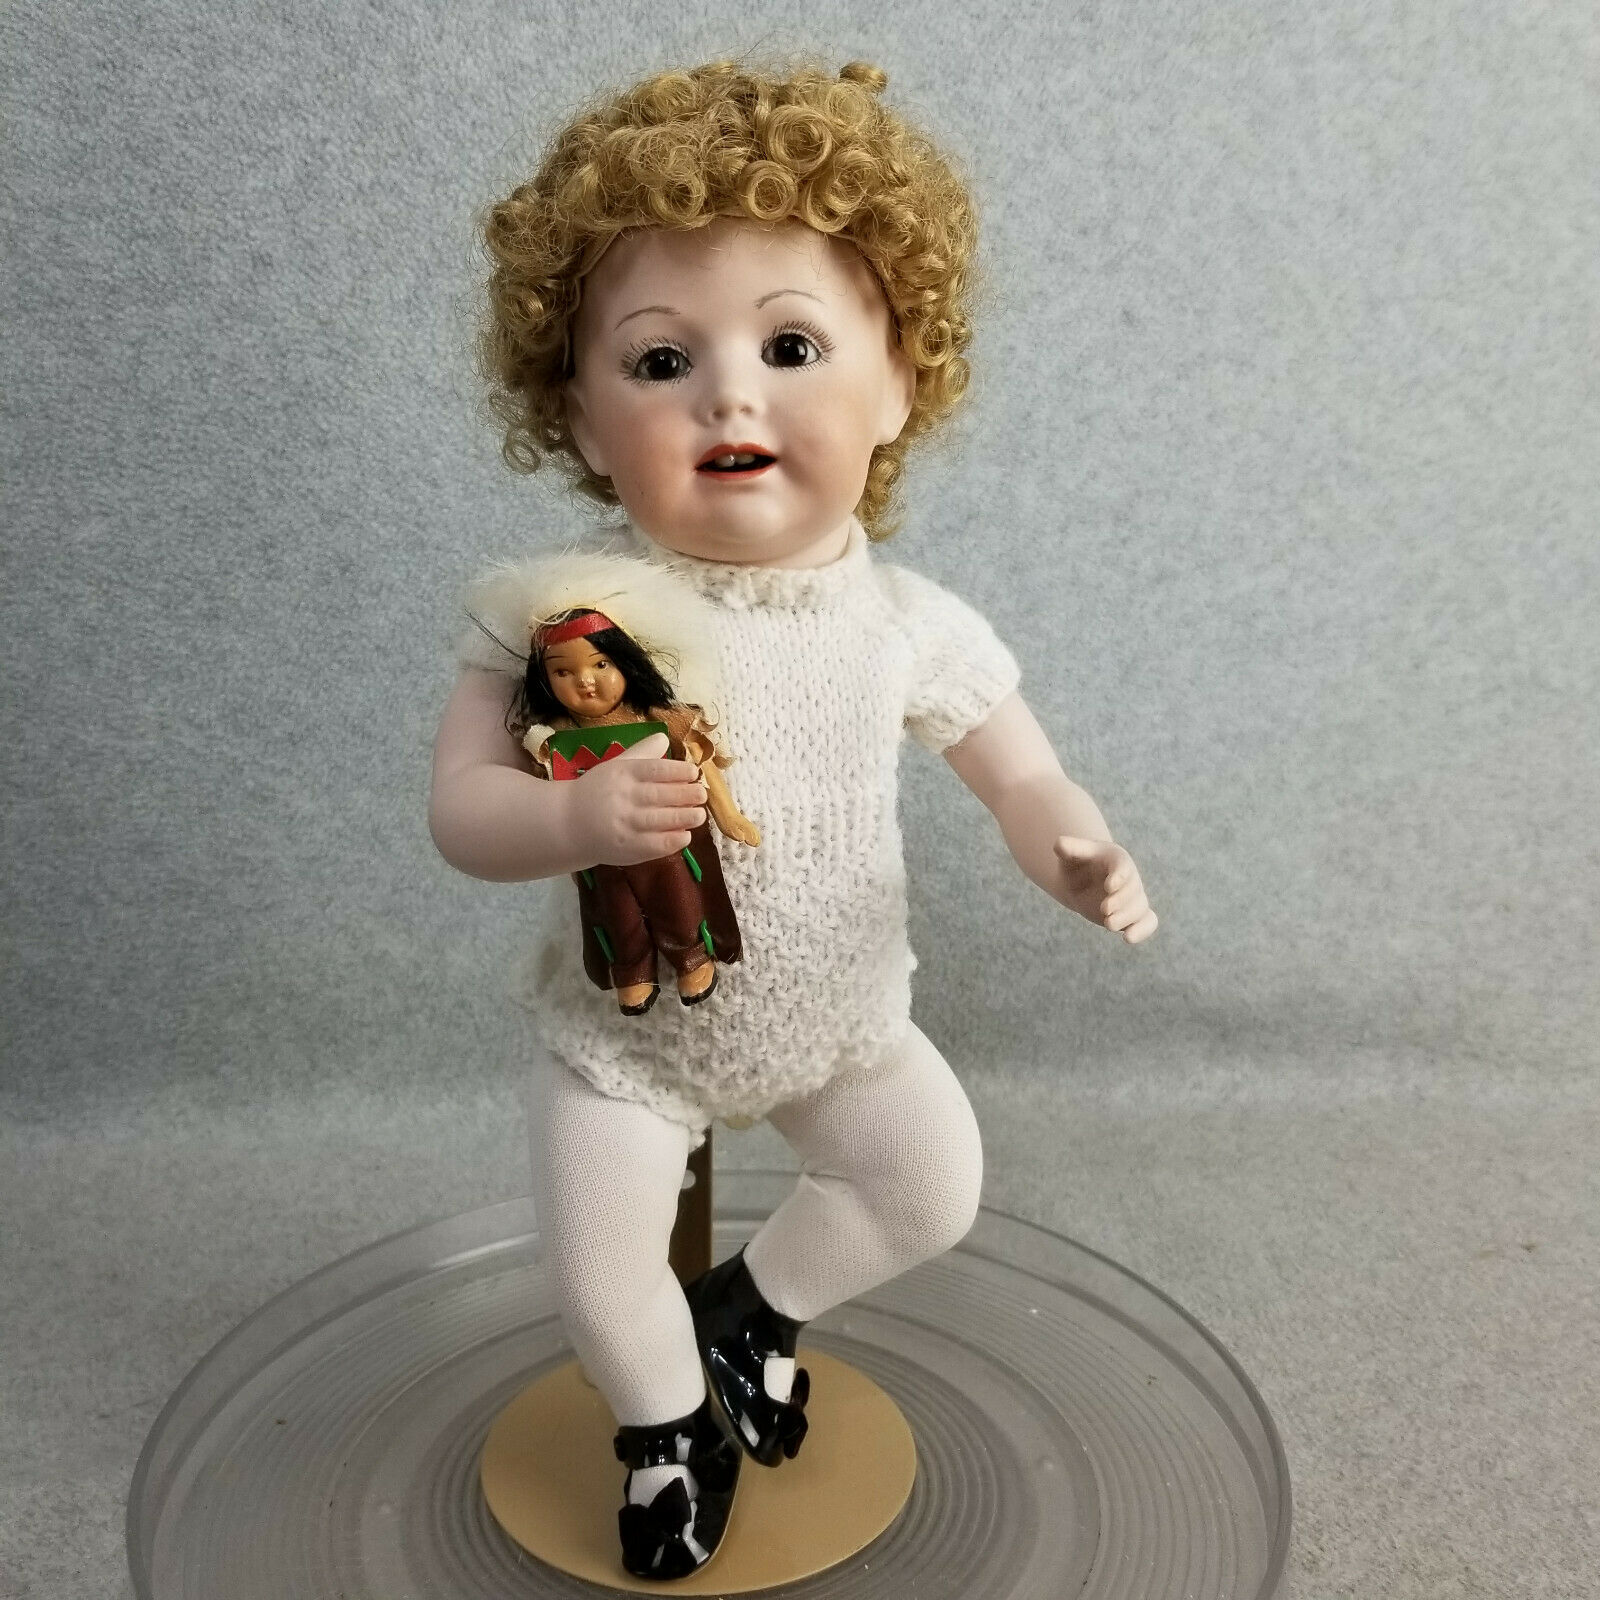 14" Antique Reproduction German Bisque Jdk Kestner Baby Doll W Old Indian Doll